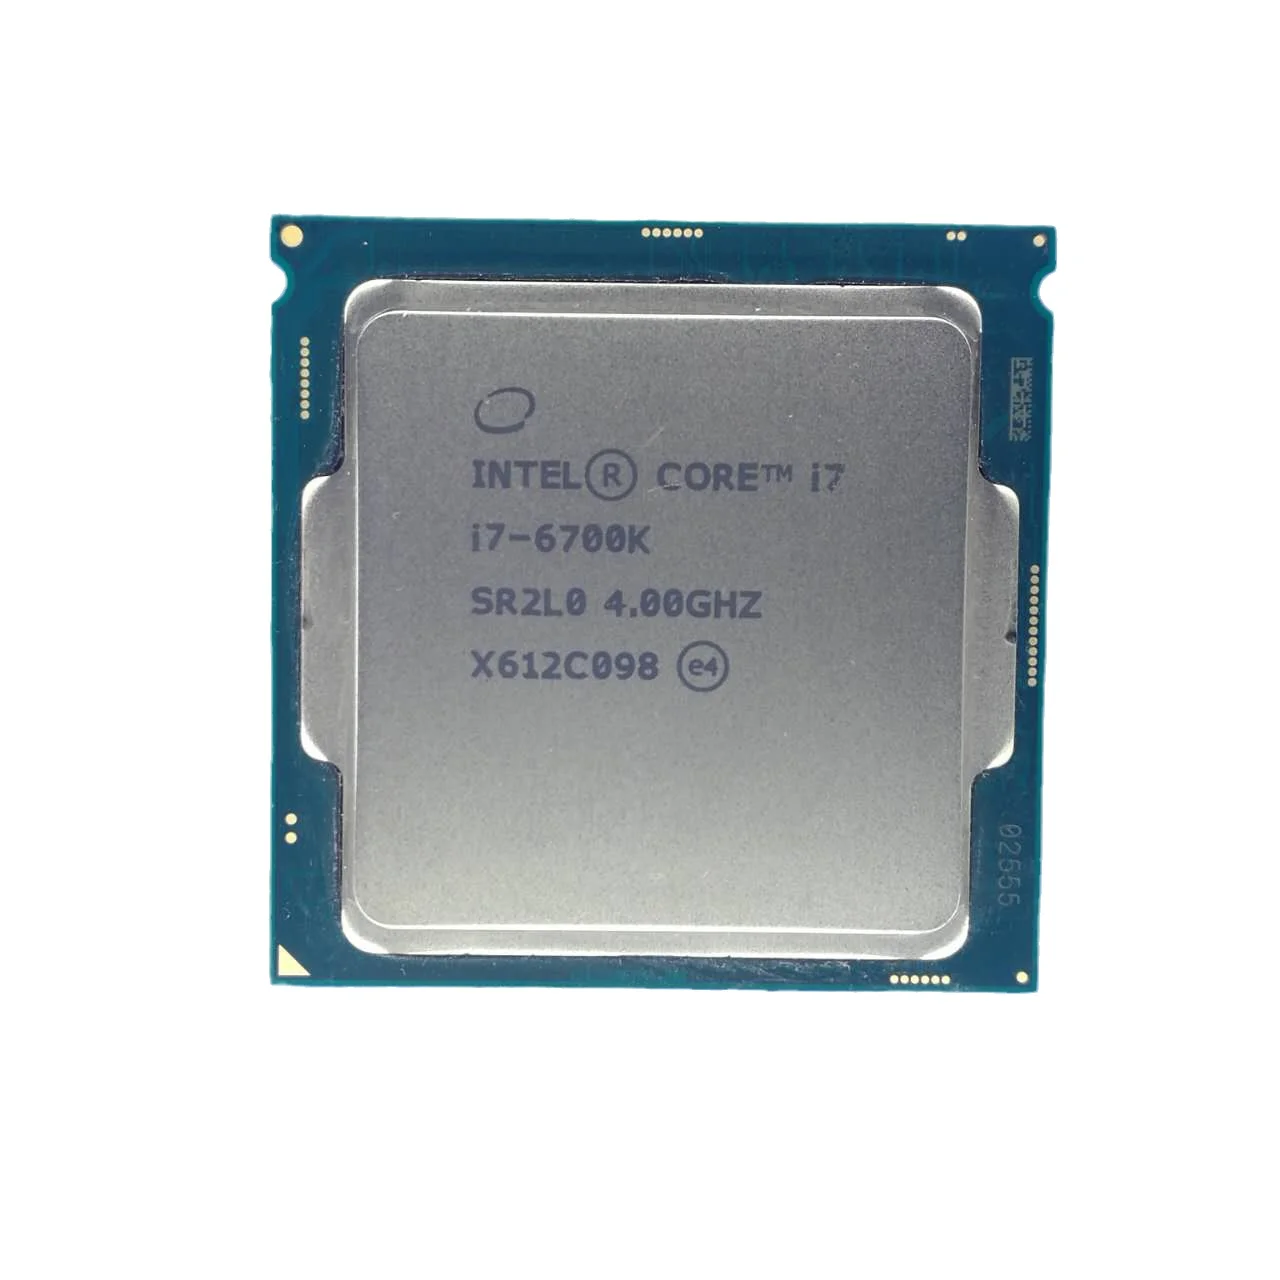 Are Used CPUs Good 